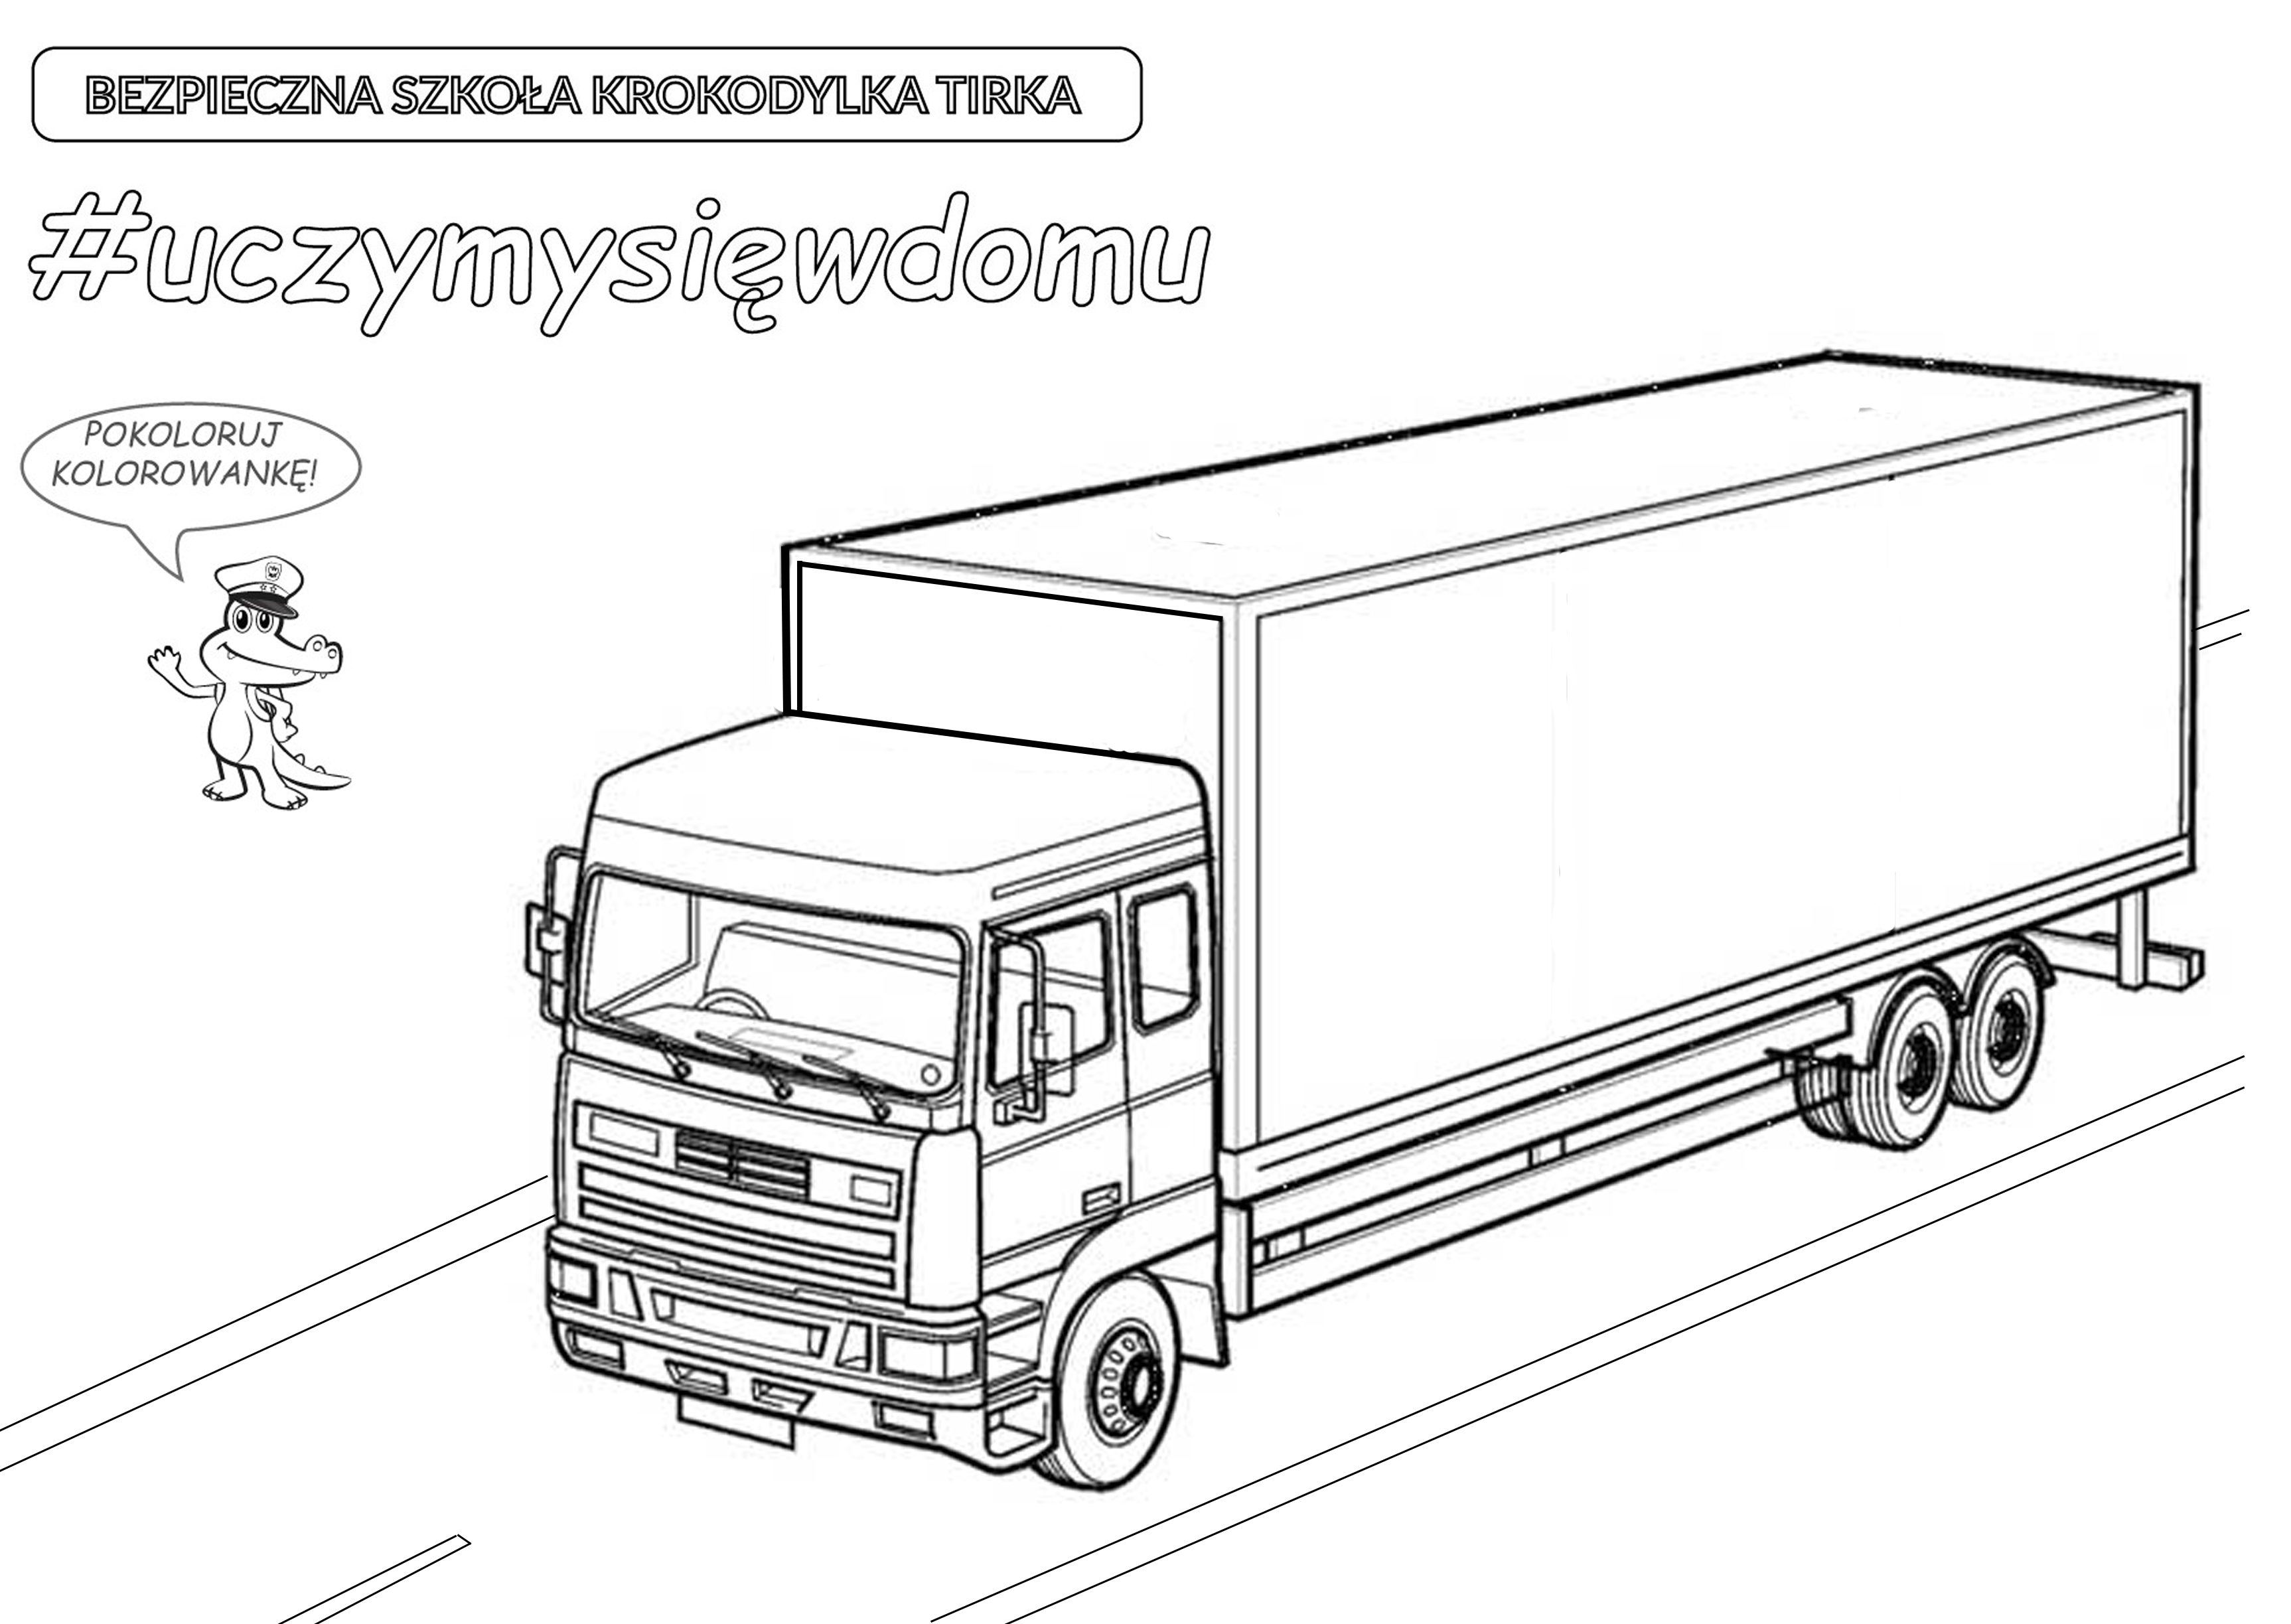 Krokodylek Tirek i ciężarówka na drodze - kolorowanka